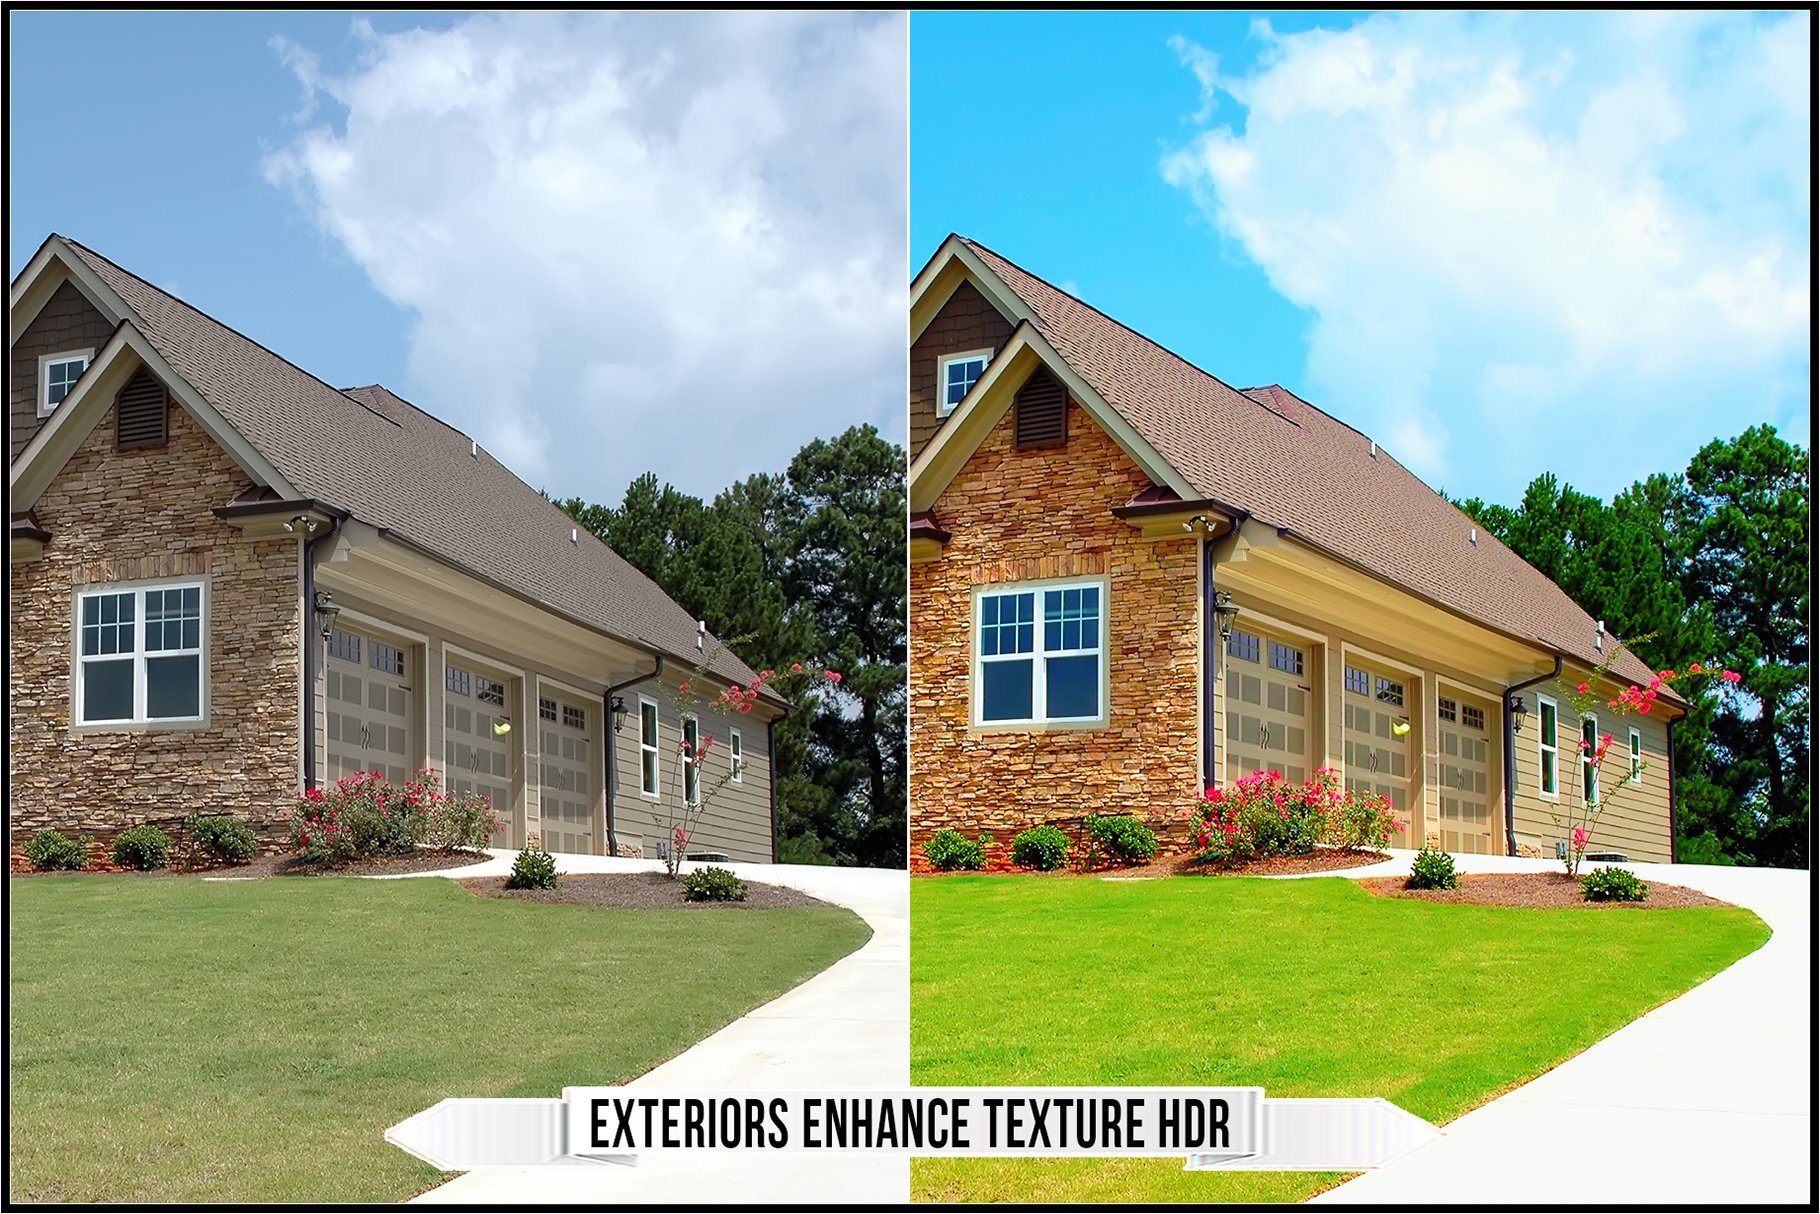 exteriors enhance texture hdr 750